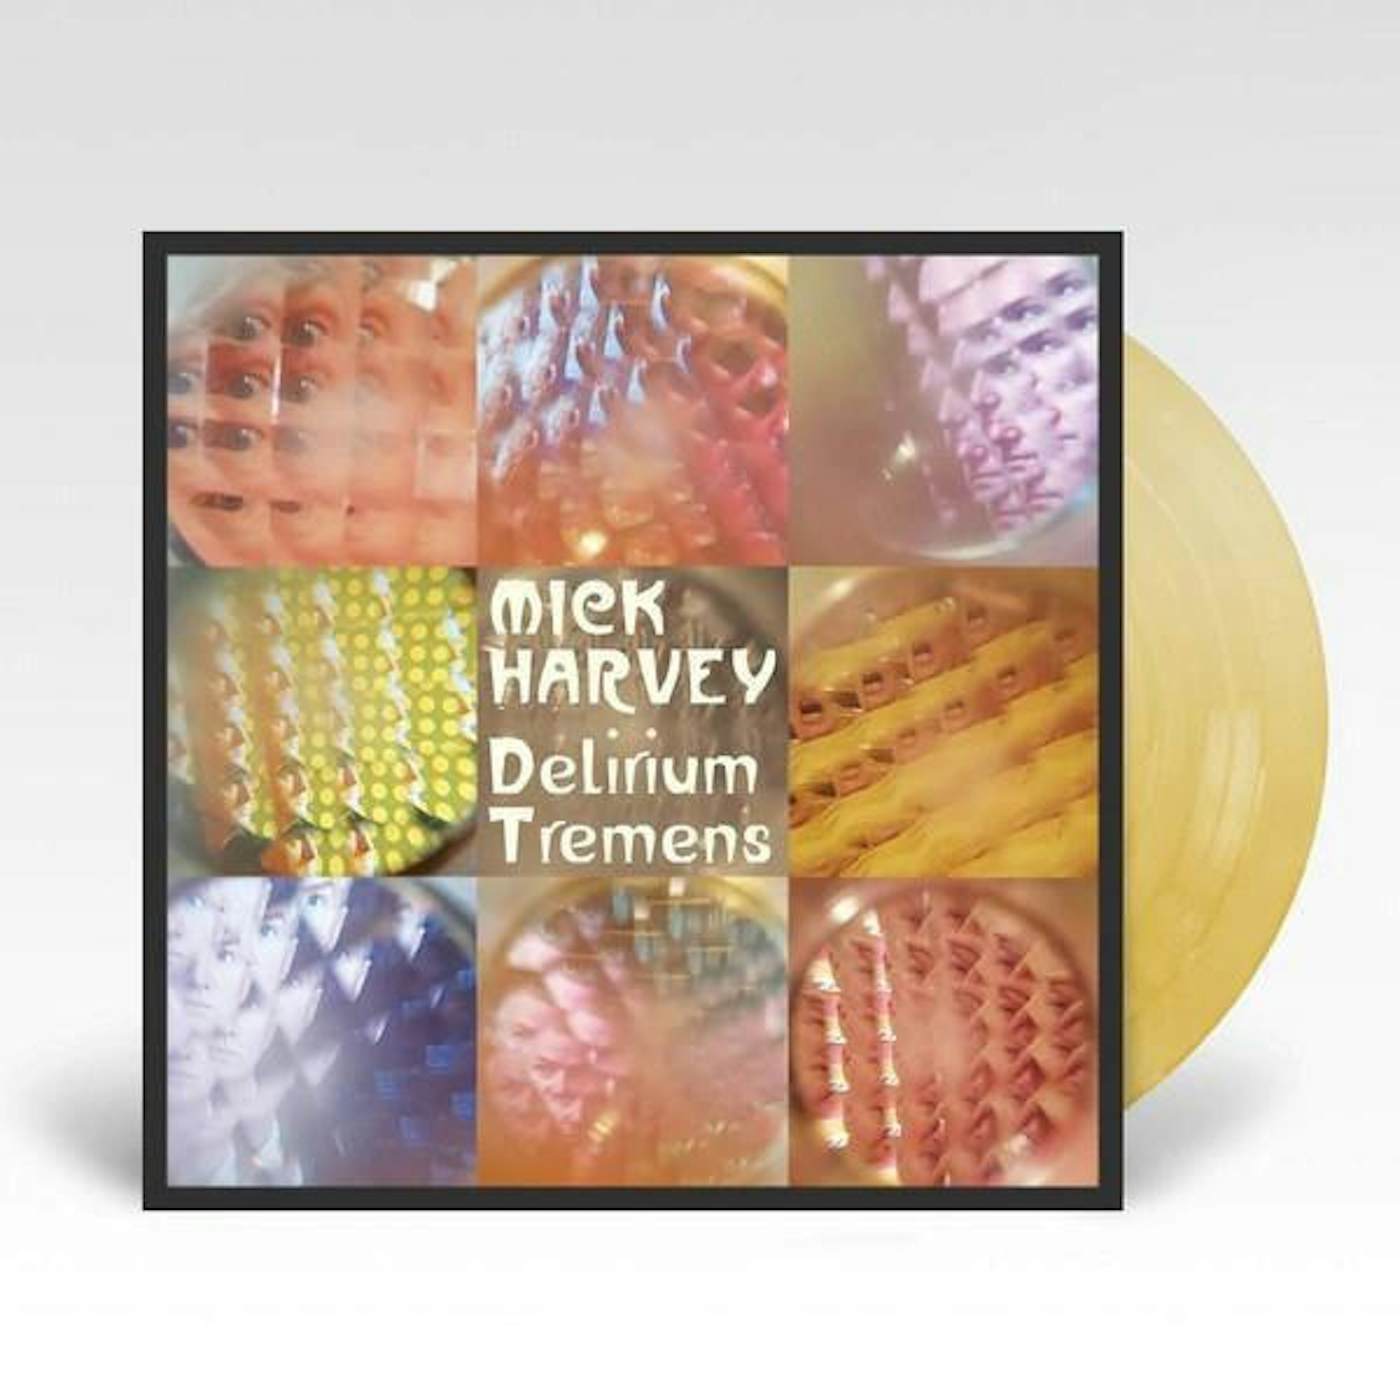 Mick Harvey Delirium Tremens (Limited/Yellow Vinyl Record)